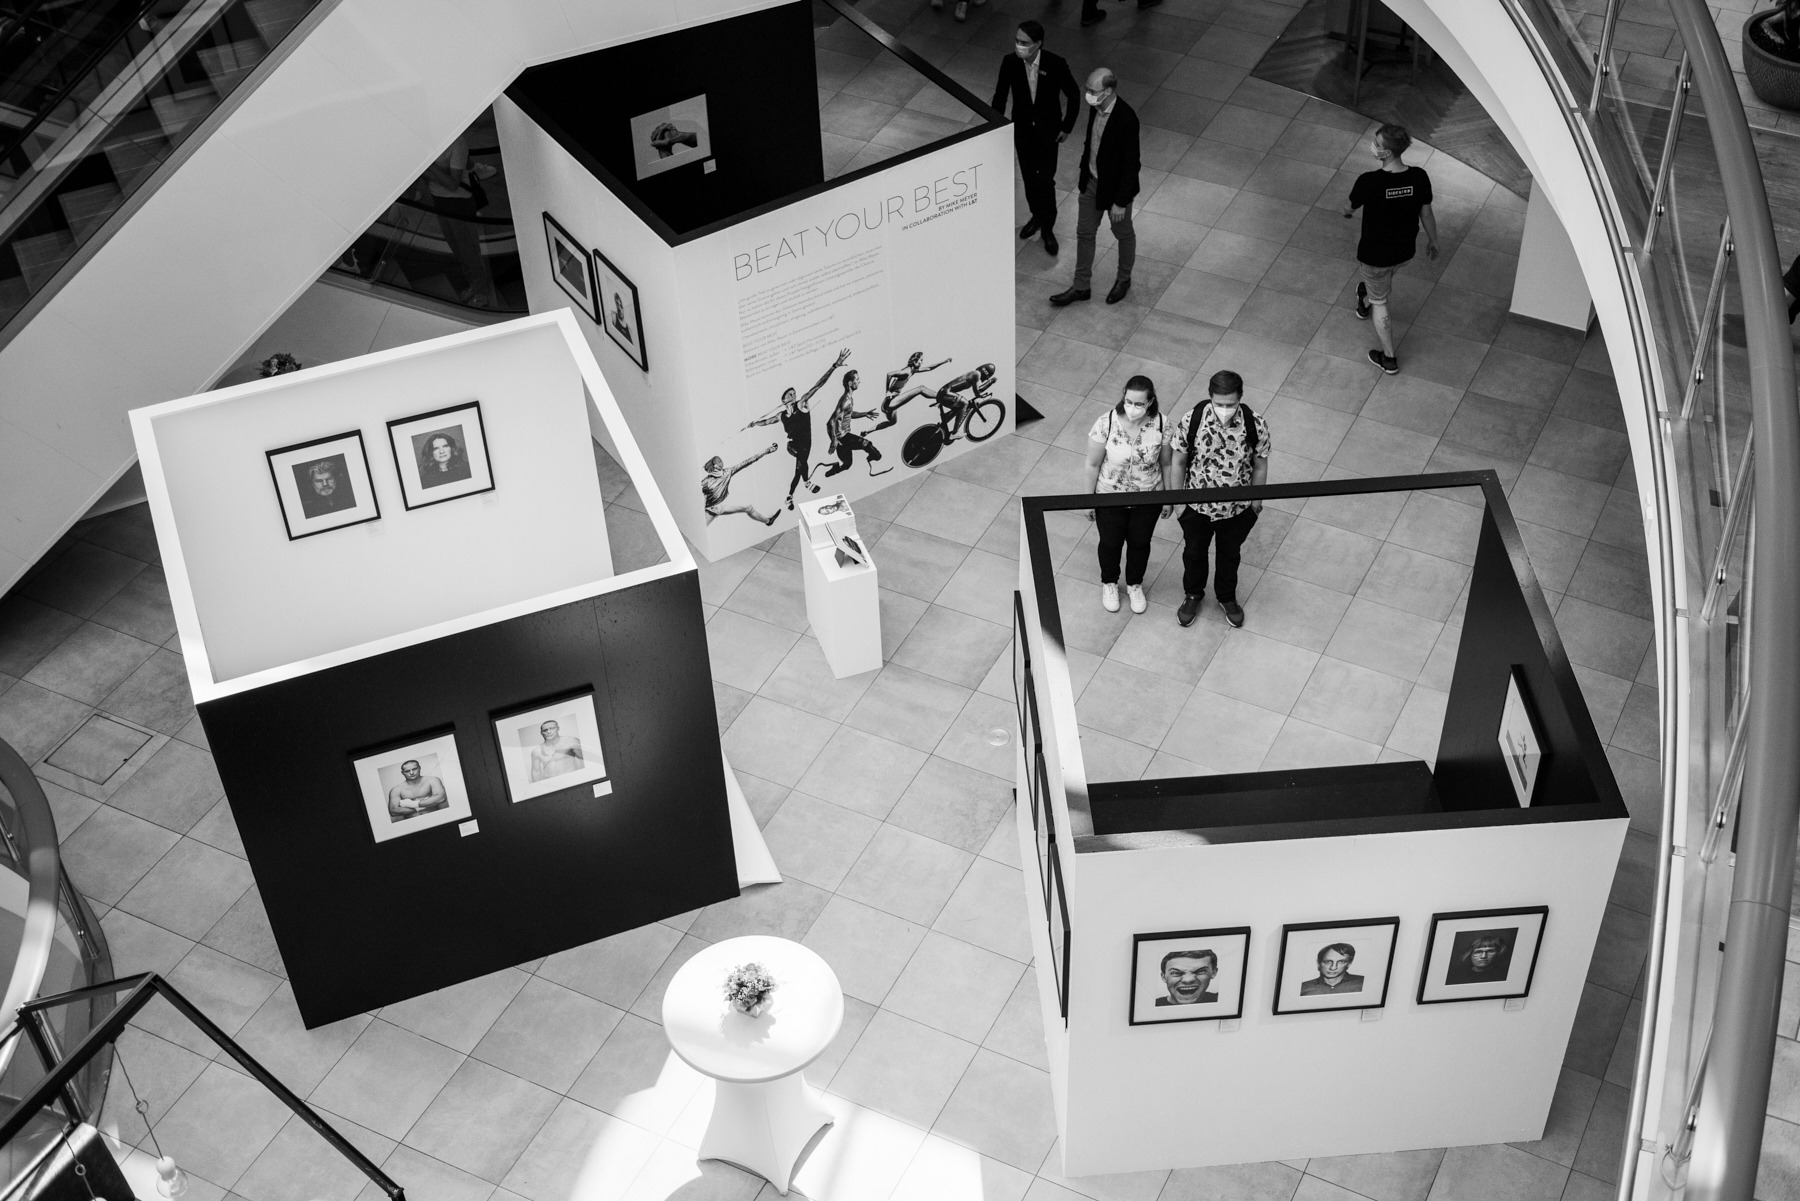 beat your best exhibition opening & art installation   lengermann und trieschmann osnabrück by Mike Meyer Photography